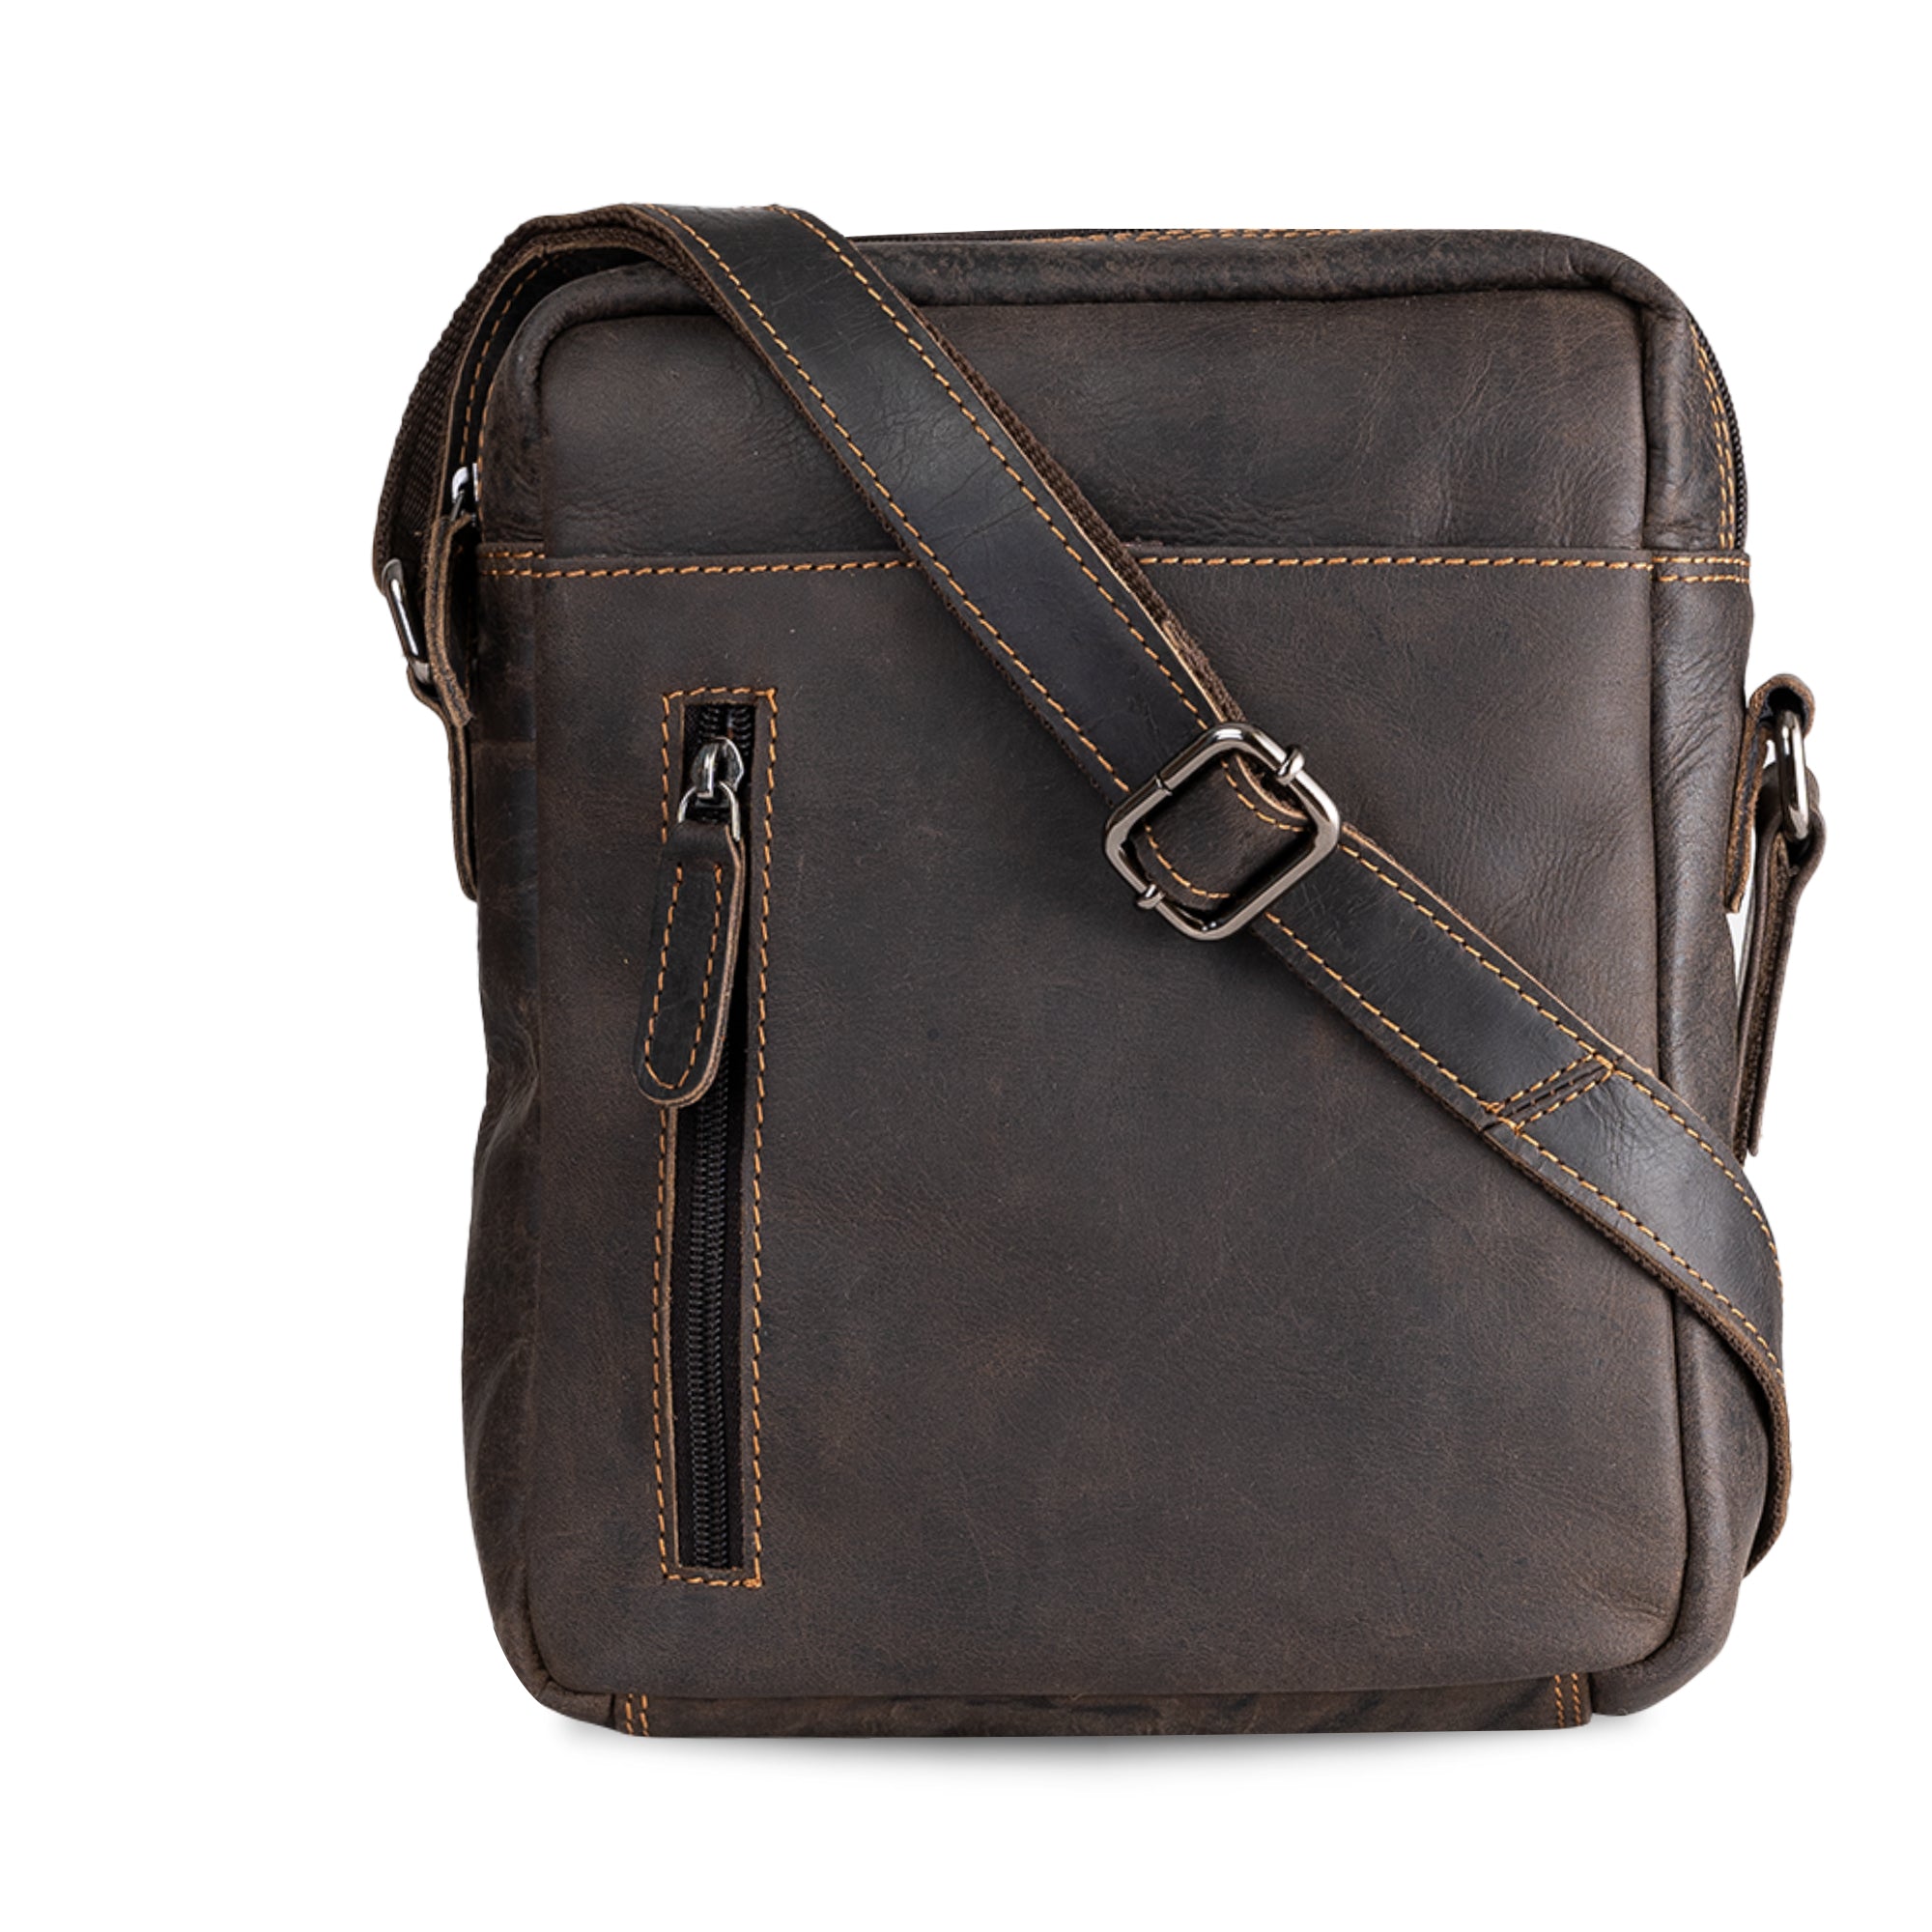 Buy Premium Leather Bags & Luxury Accessories Online - Von Baer™